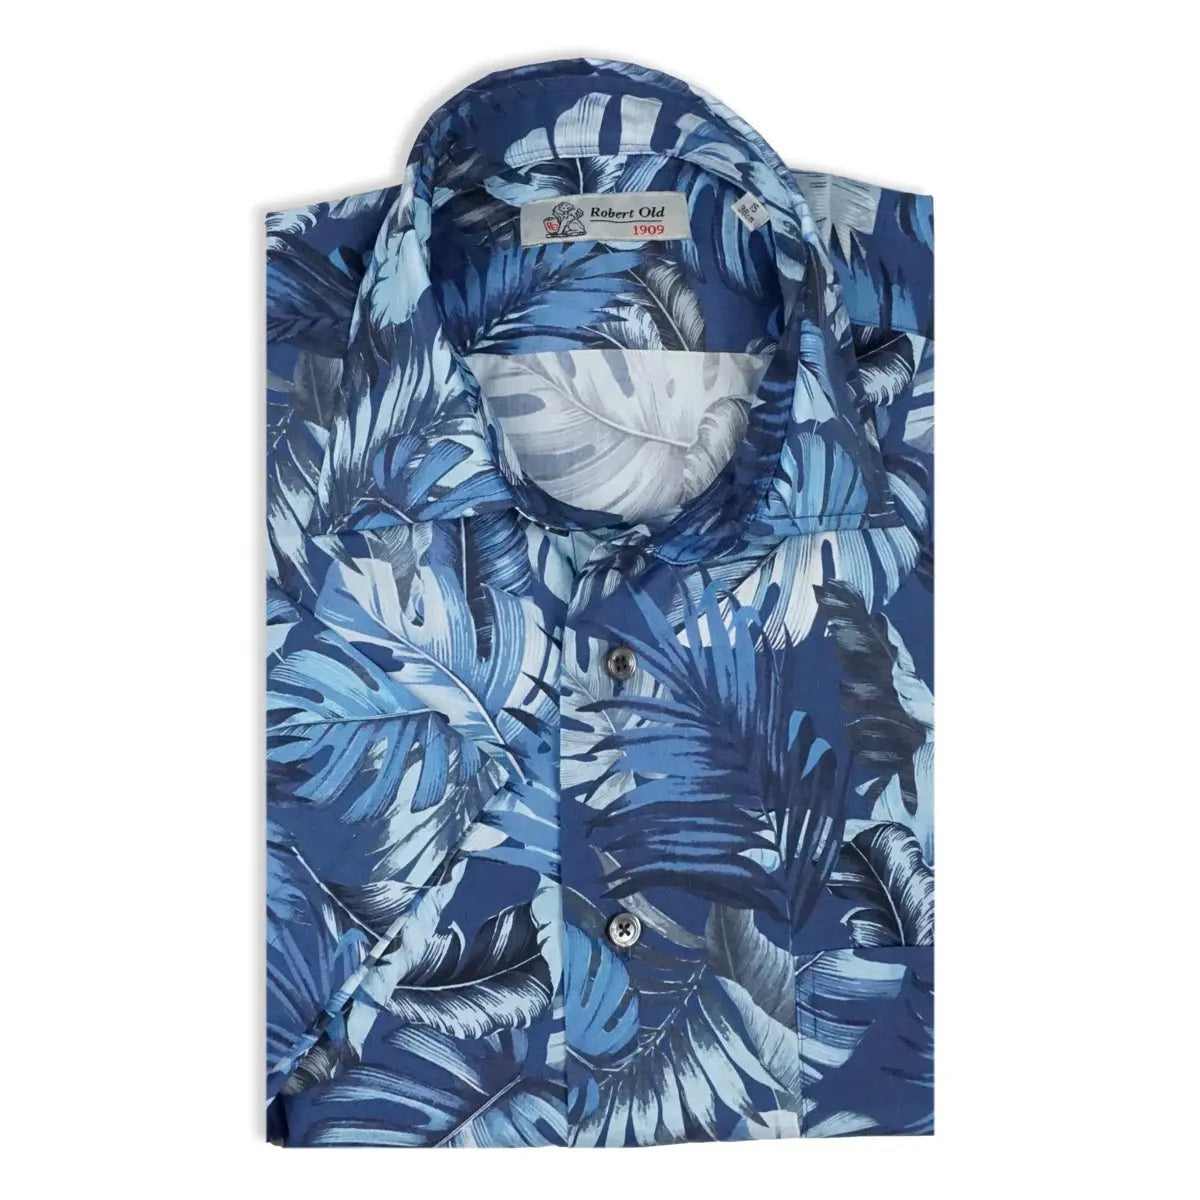 Blue Tropical Supraluxe Print Short Sleeve Shirt  Robert Old   